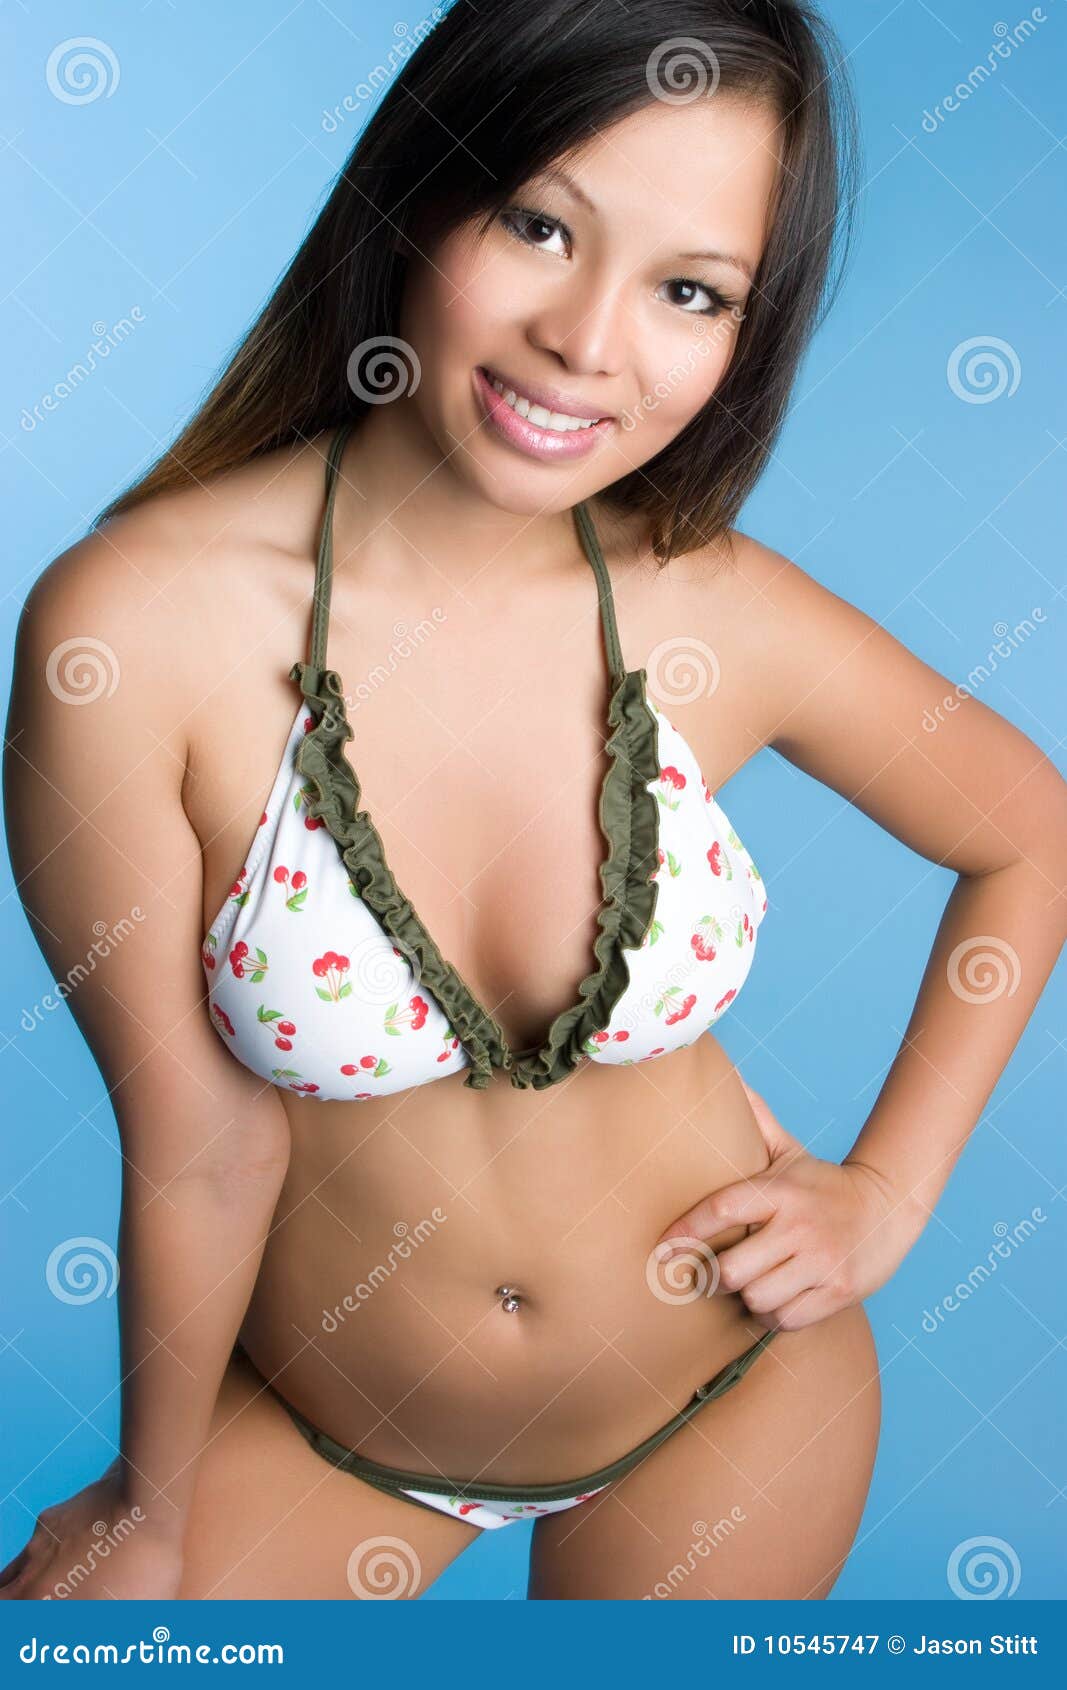 Photos of bikinis asians